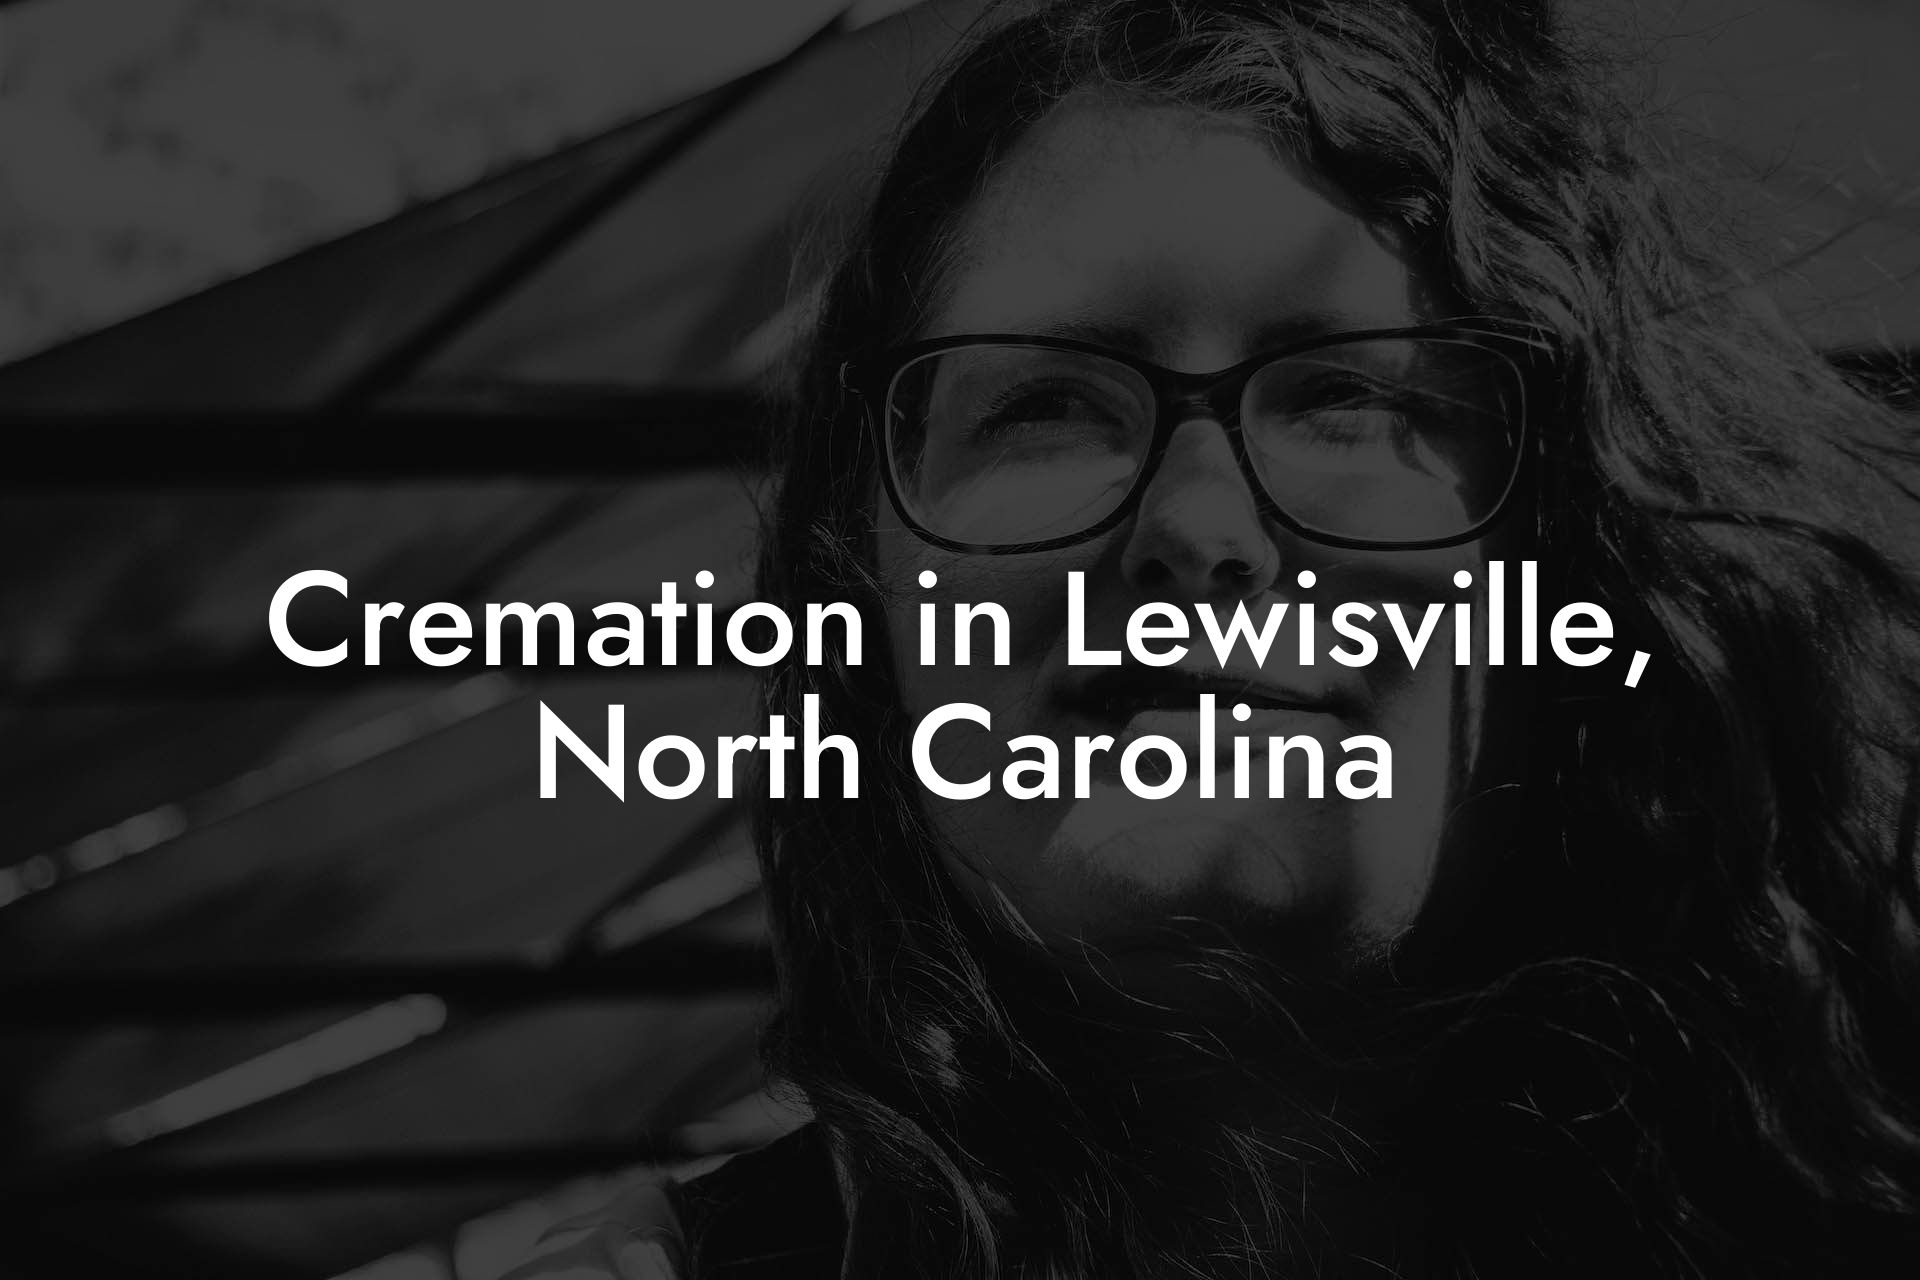 Cremation in Lewisville, North Carolina